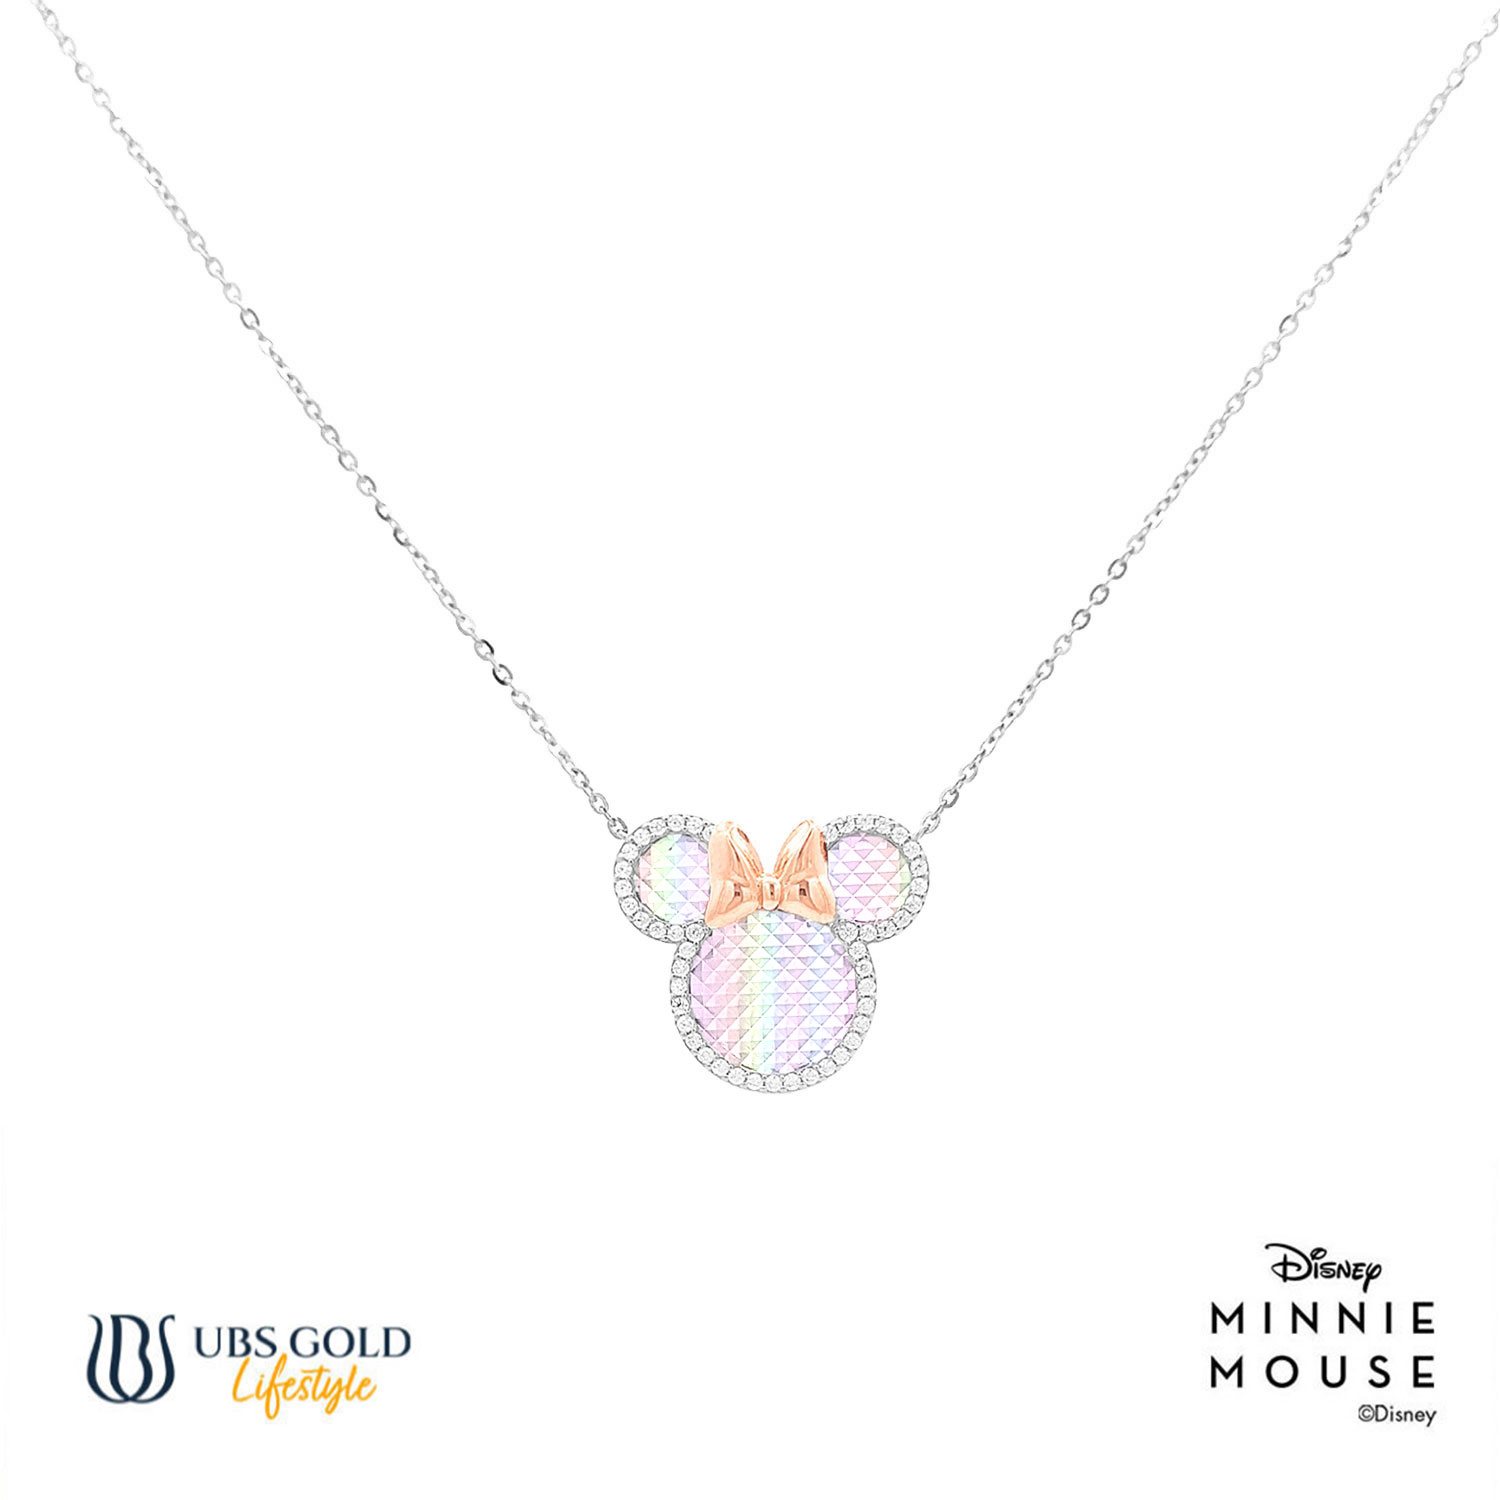 UBS Gold Kalung Emas Disney Minnie Mouse Rainbow - Kky0490 - 17K